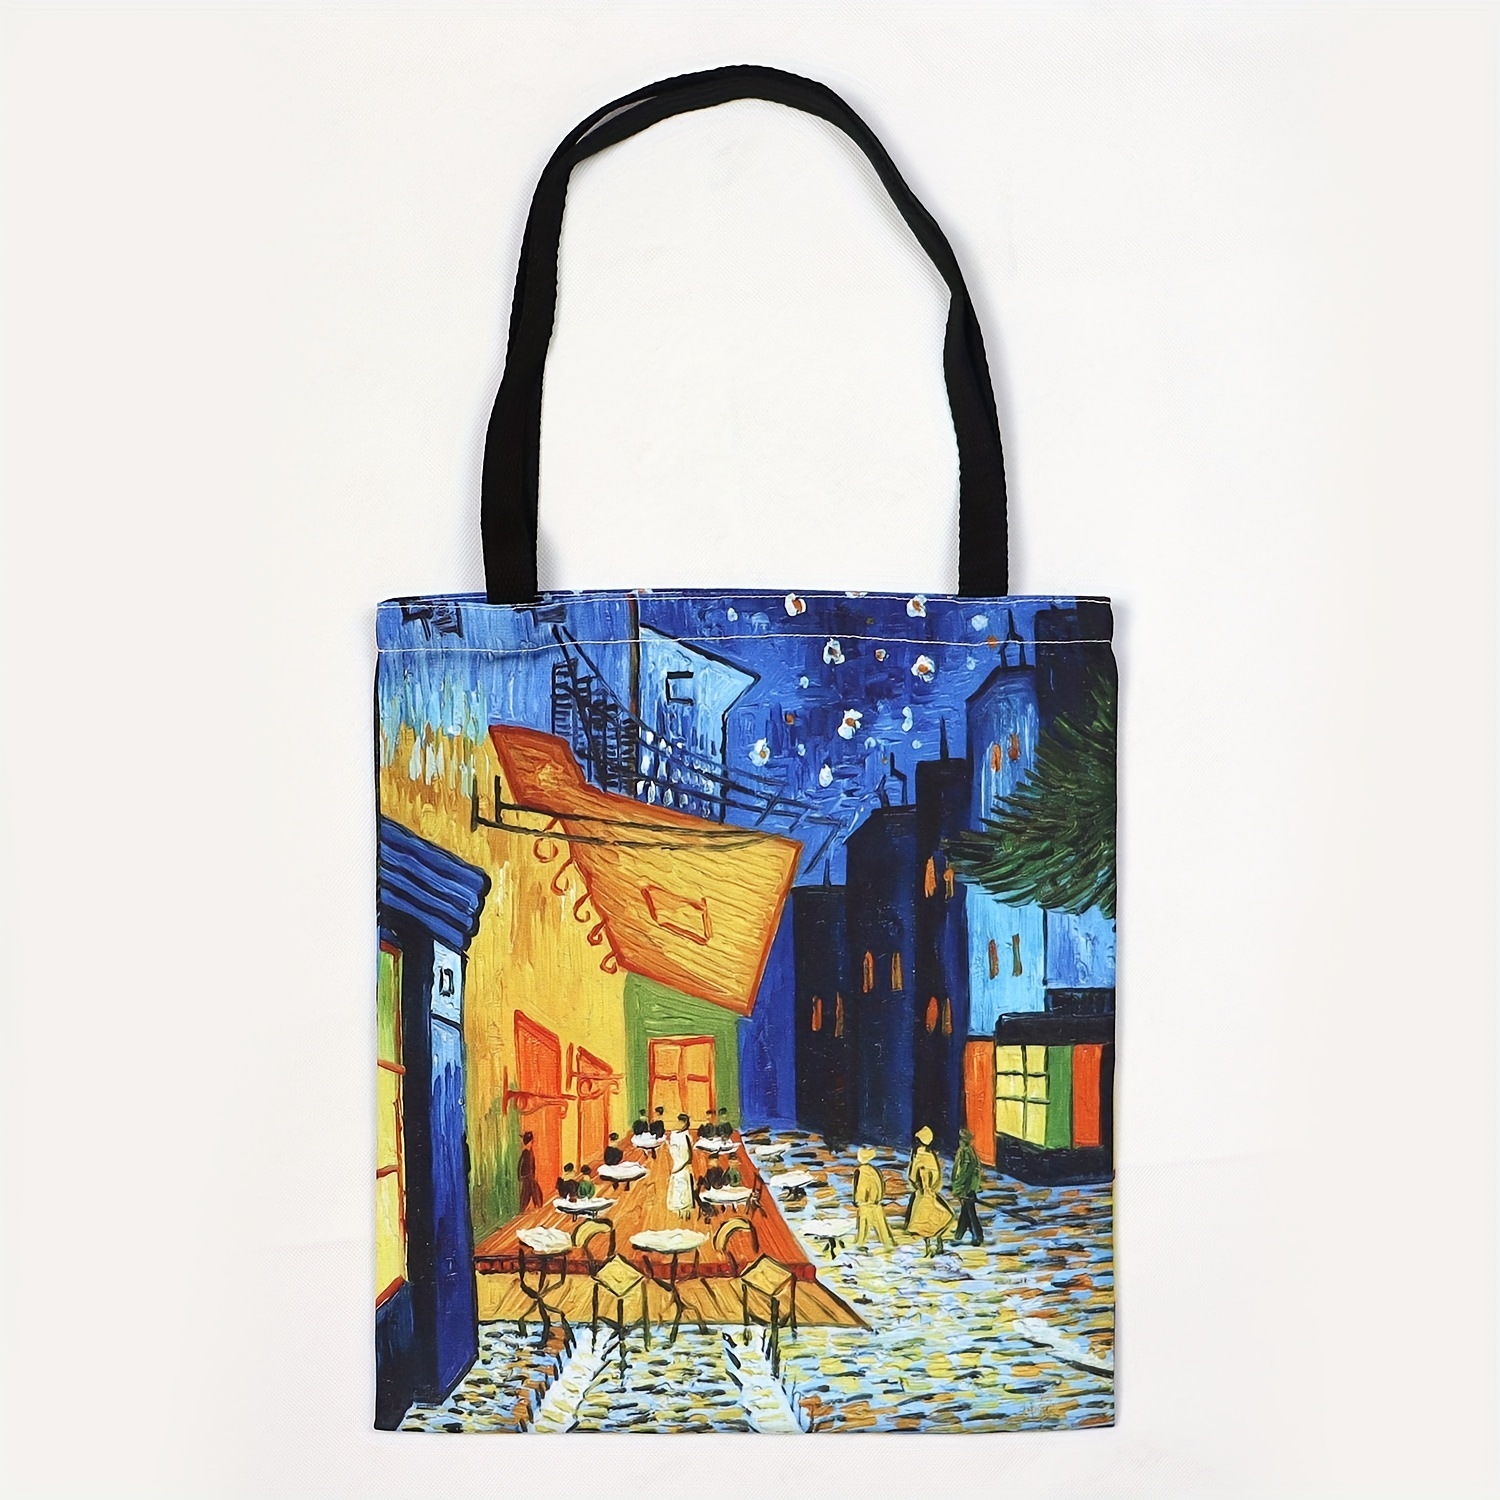 Van Gogh Tote Bag the Starry Night Art Print on 